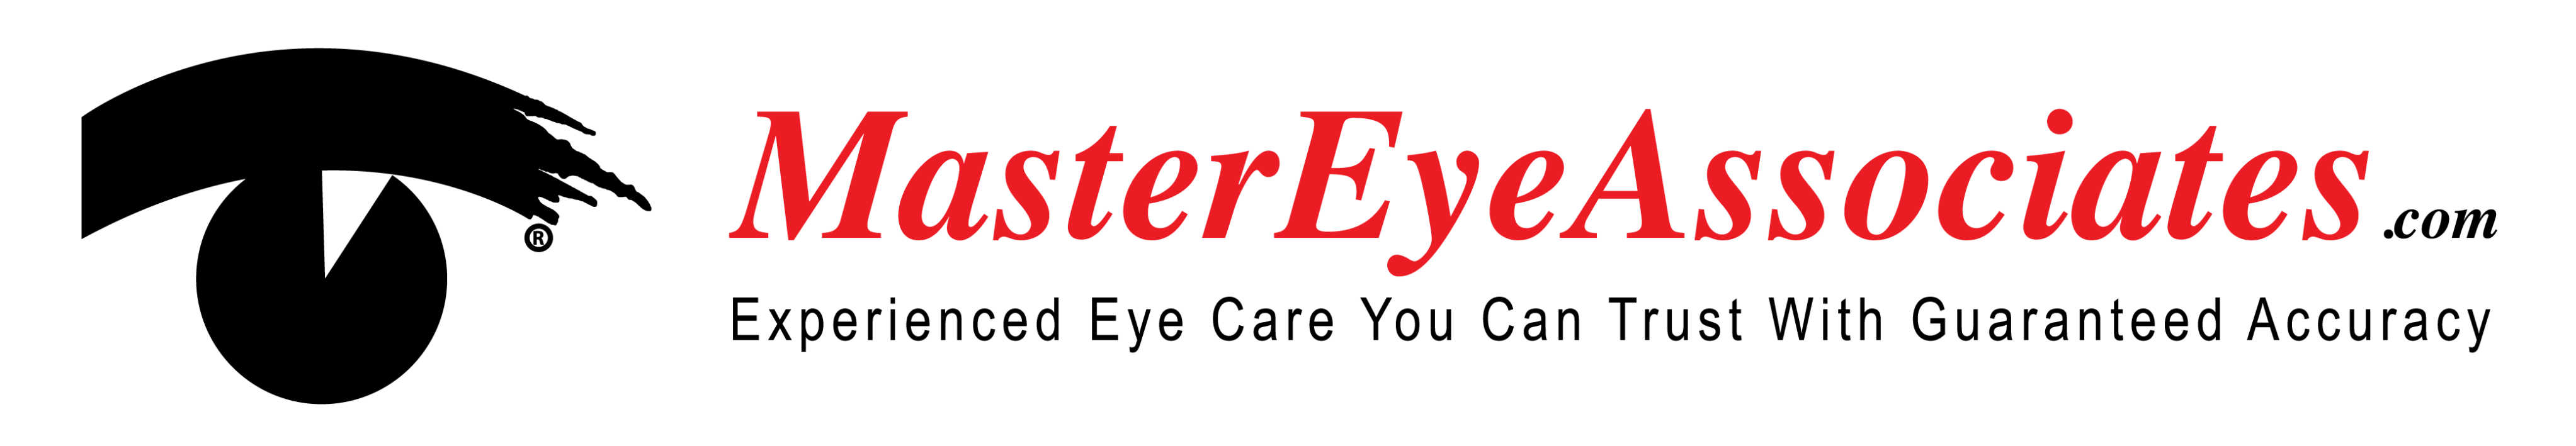 Logo no 7 days Master Eye Associates-Transparency Better Size